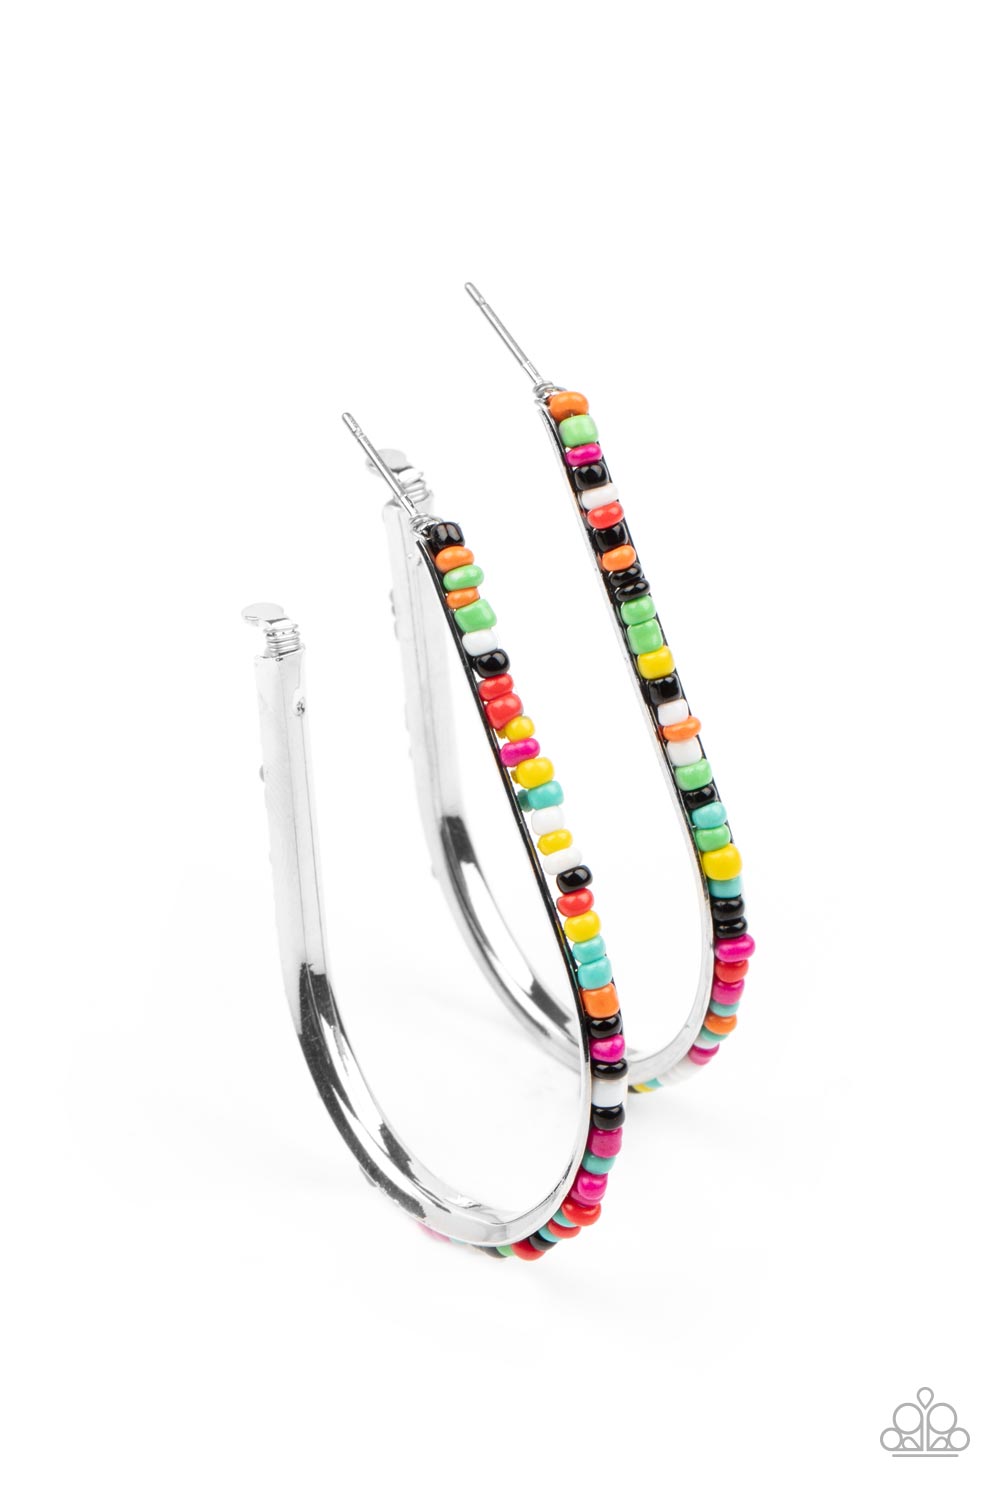 Beaded Bauble Multi Seed Bead Hoop Earrings - Paparazzi Accessories- lightbox - CarasShop.com - $5 Jewelry by Cara Jewels